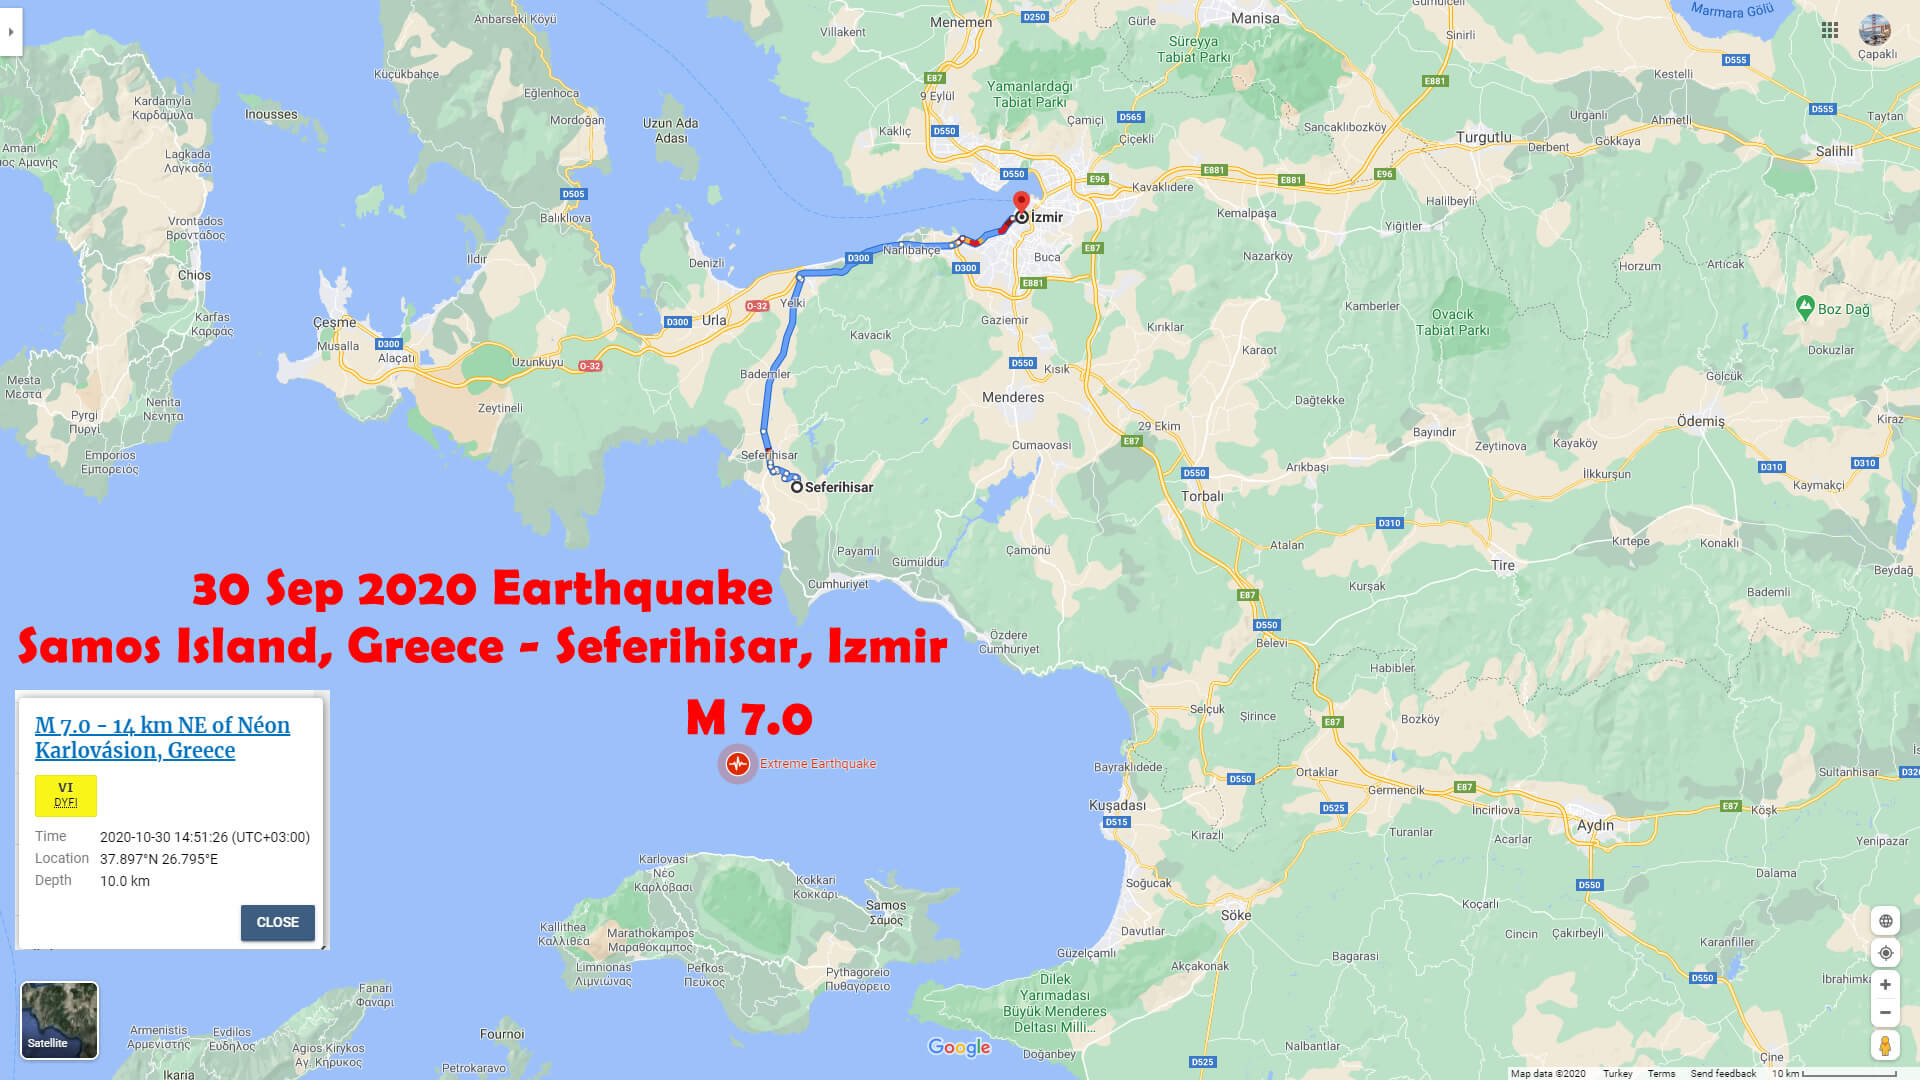 Samos Greece - Seferihisar Izmir - Sep 30 Earthquake Google Map